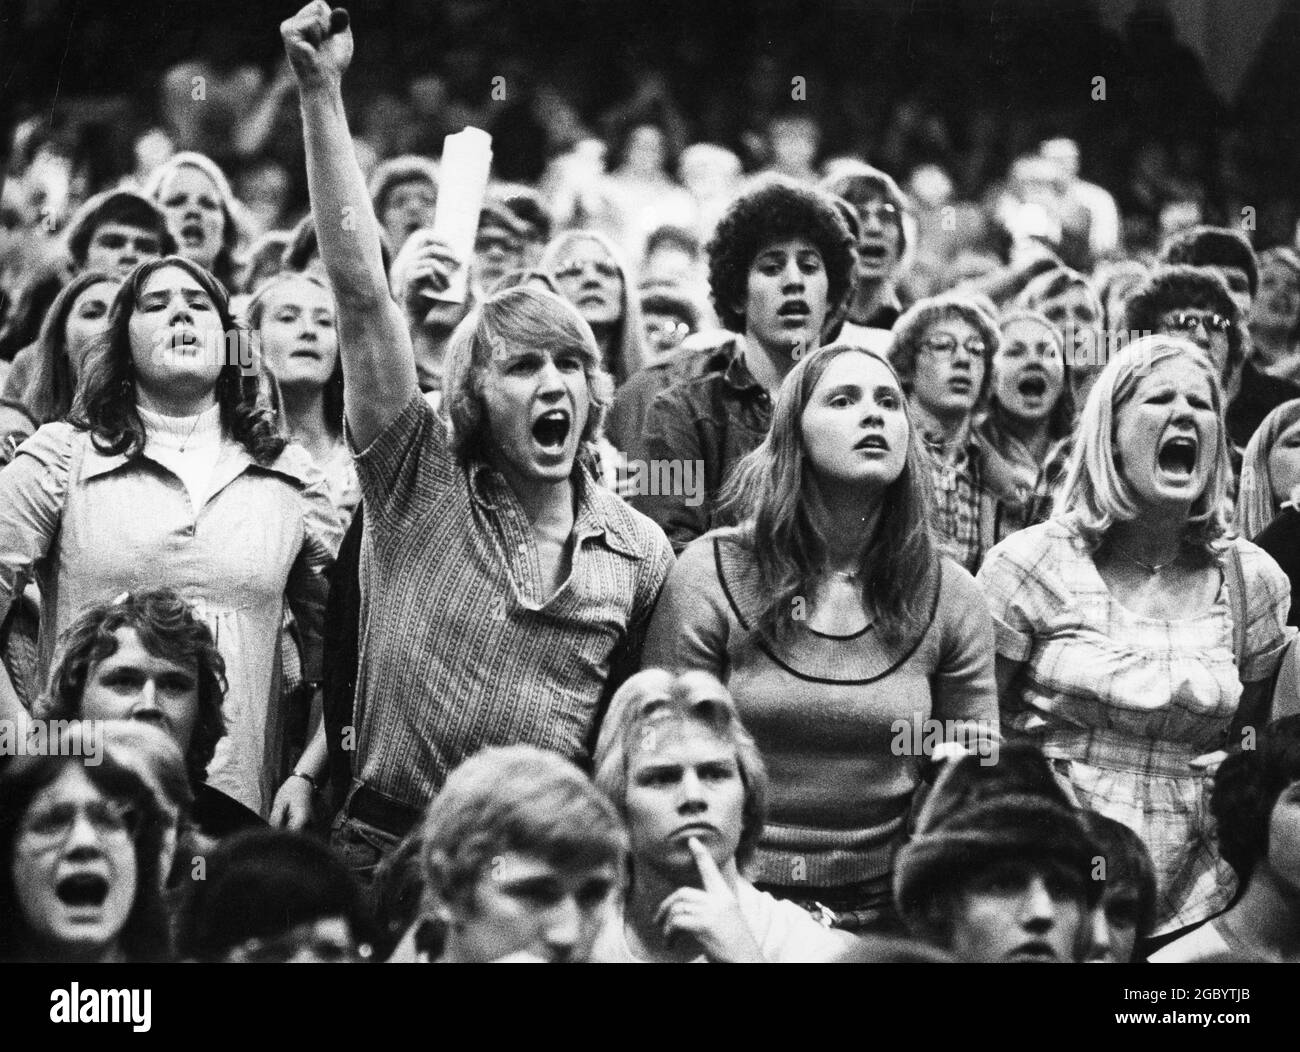 Madison Wisconsin USA, circa 1973: Fans cheer at the high school wrestling state championship meet. ©Bob Daemmrich Stock Photo